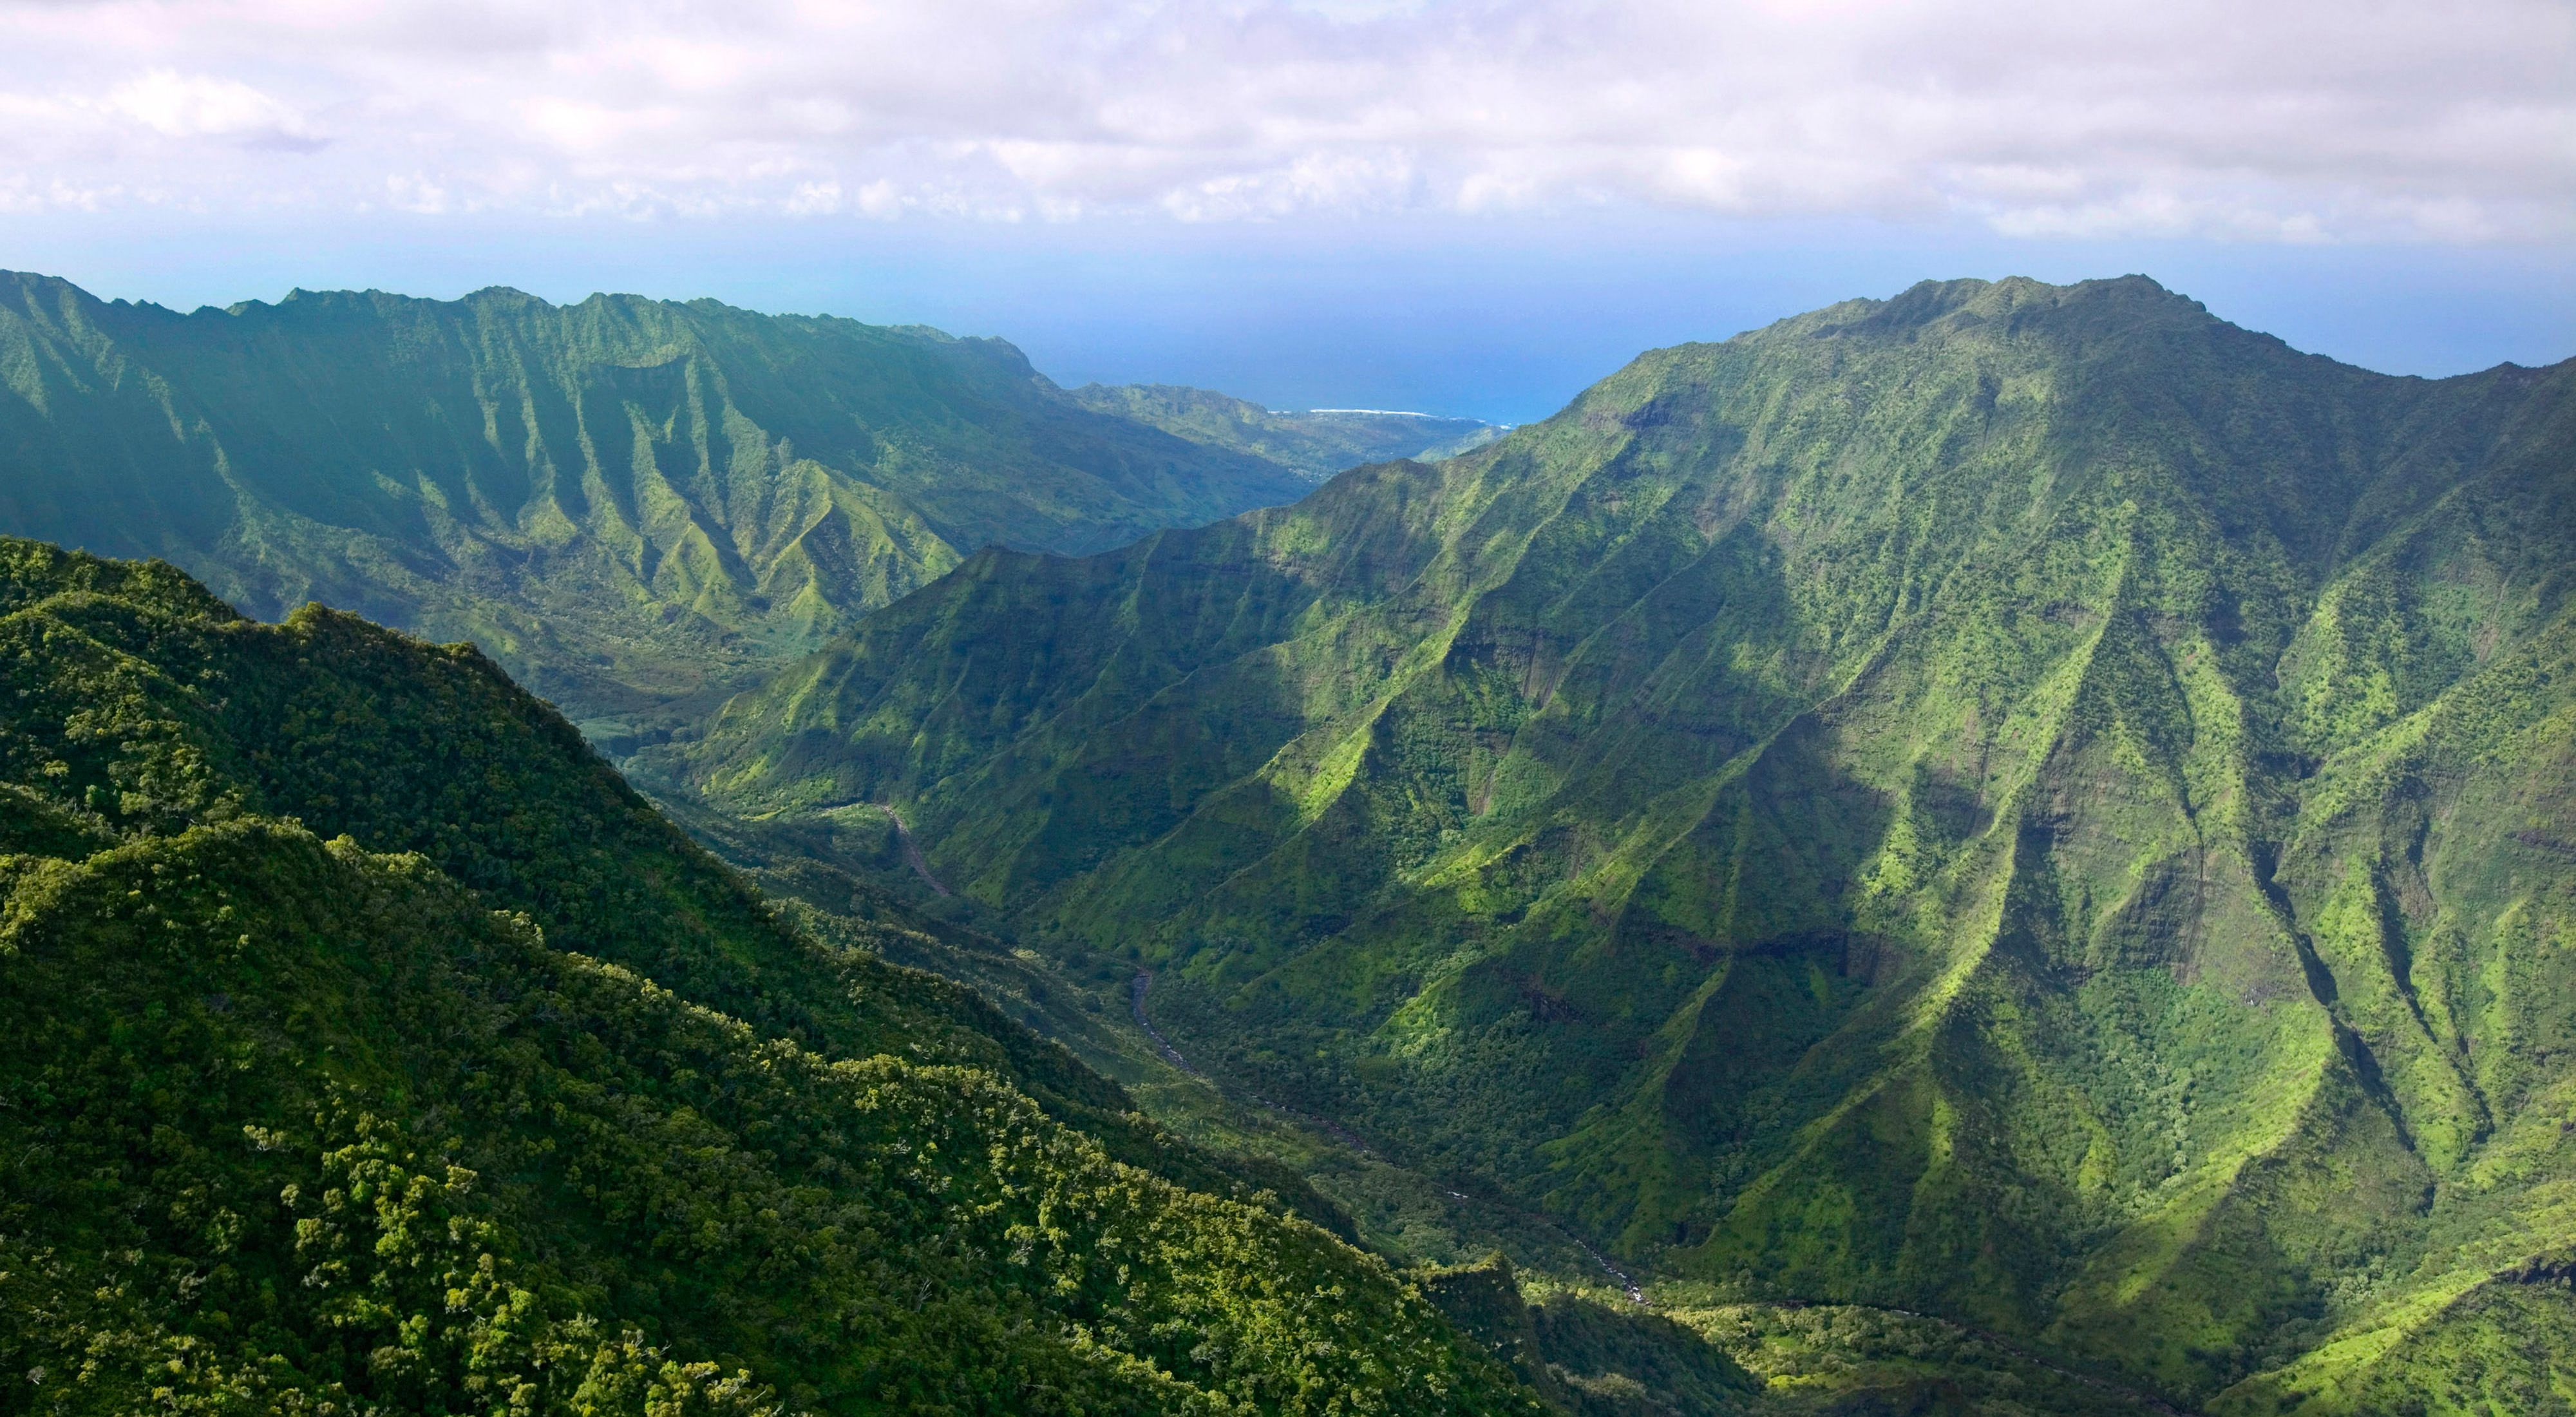 Aerial view of the rugged mountains of Wainiha Valley in Kauai, Hawaii.